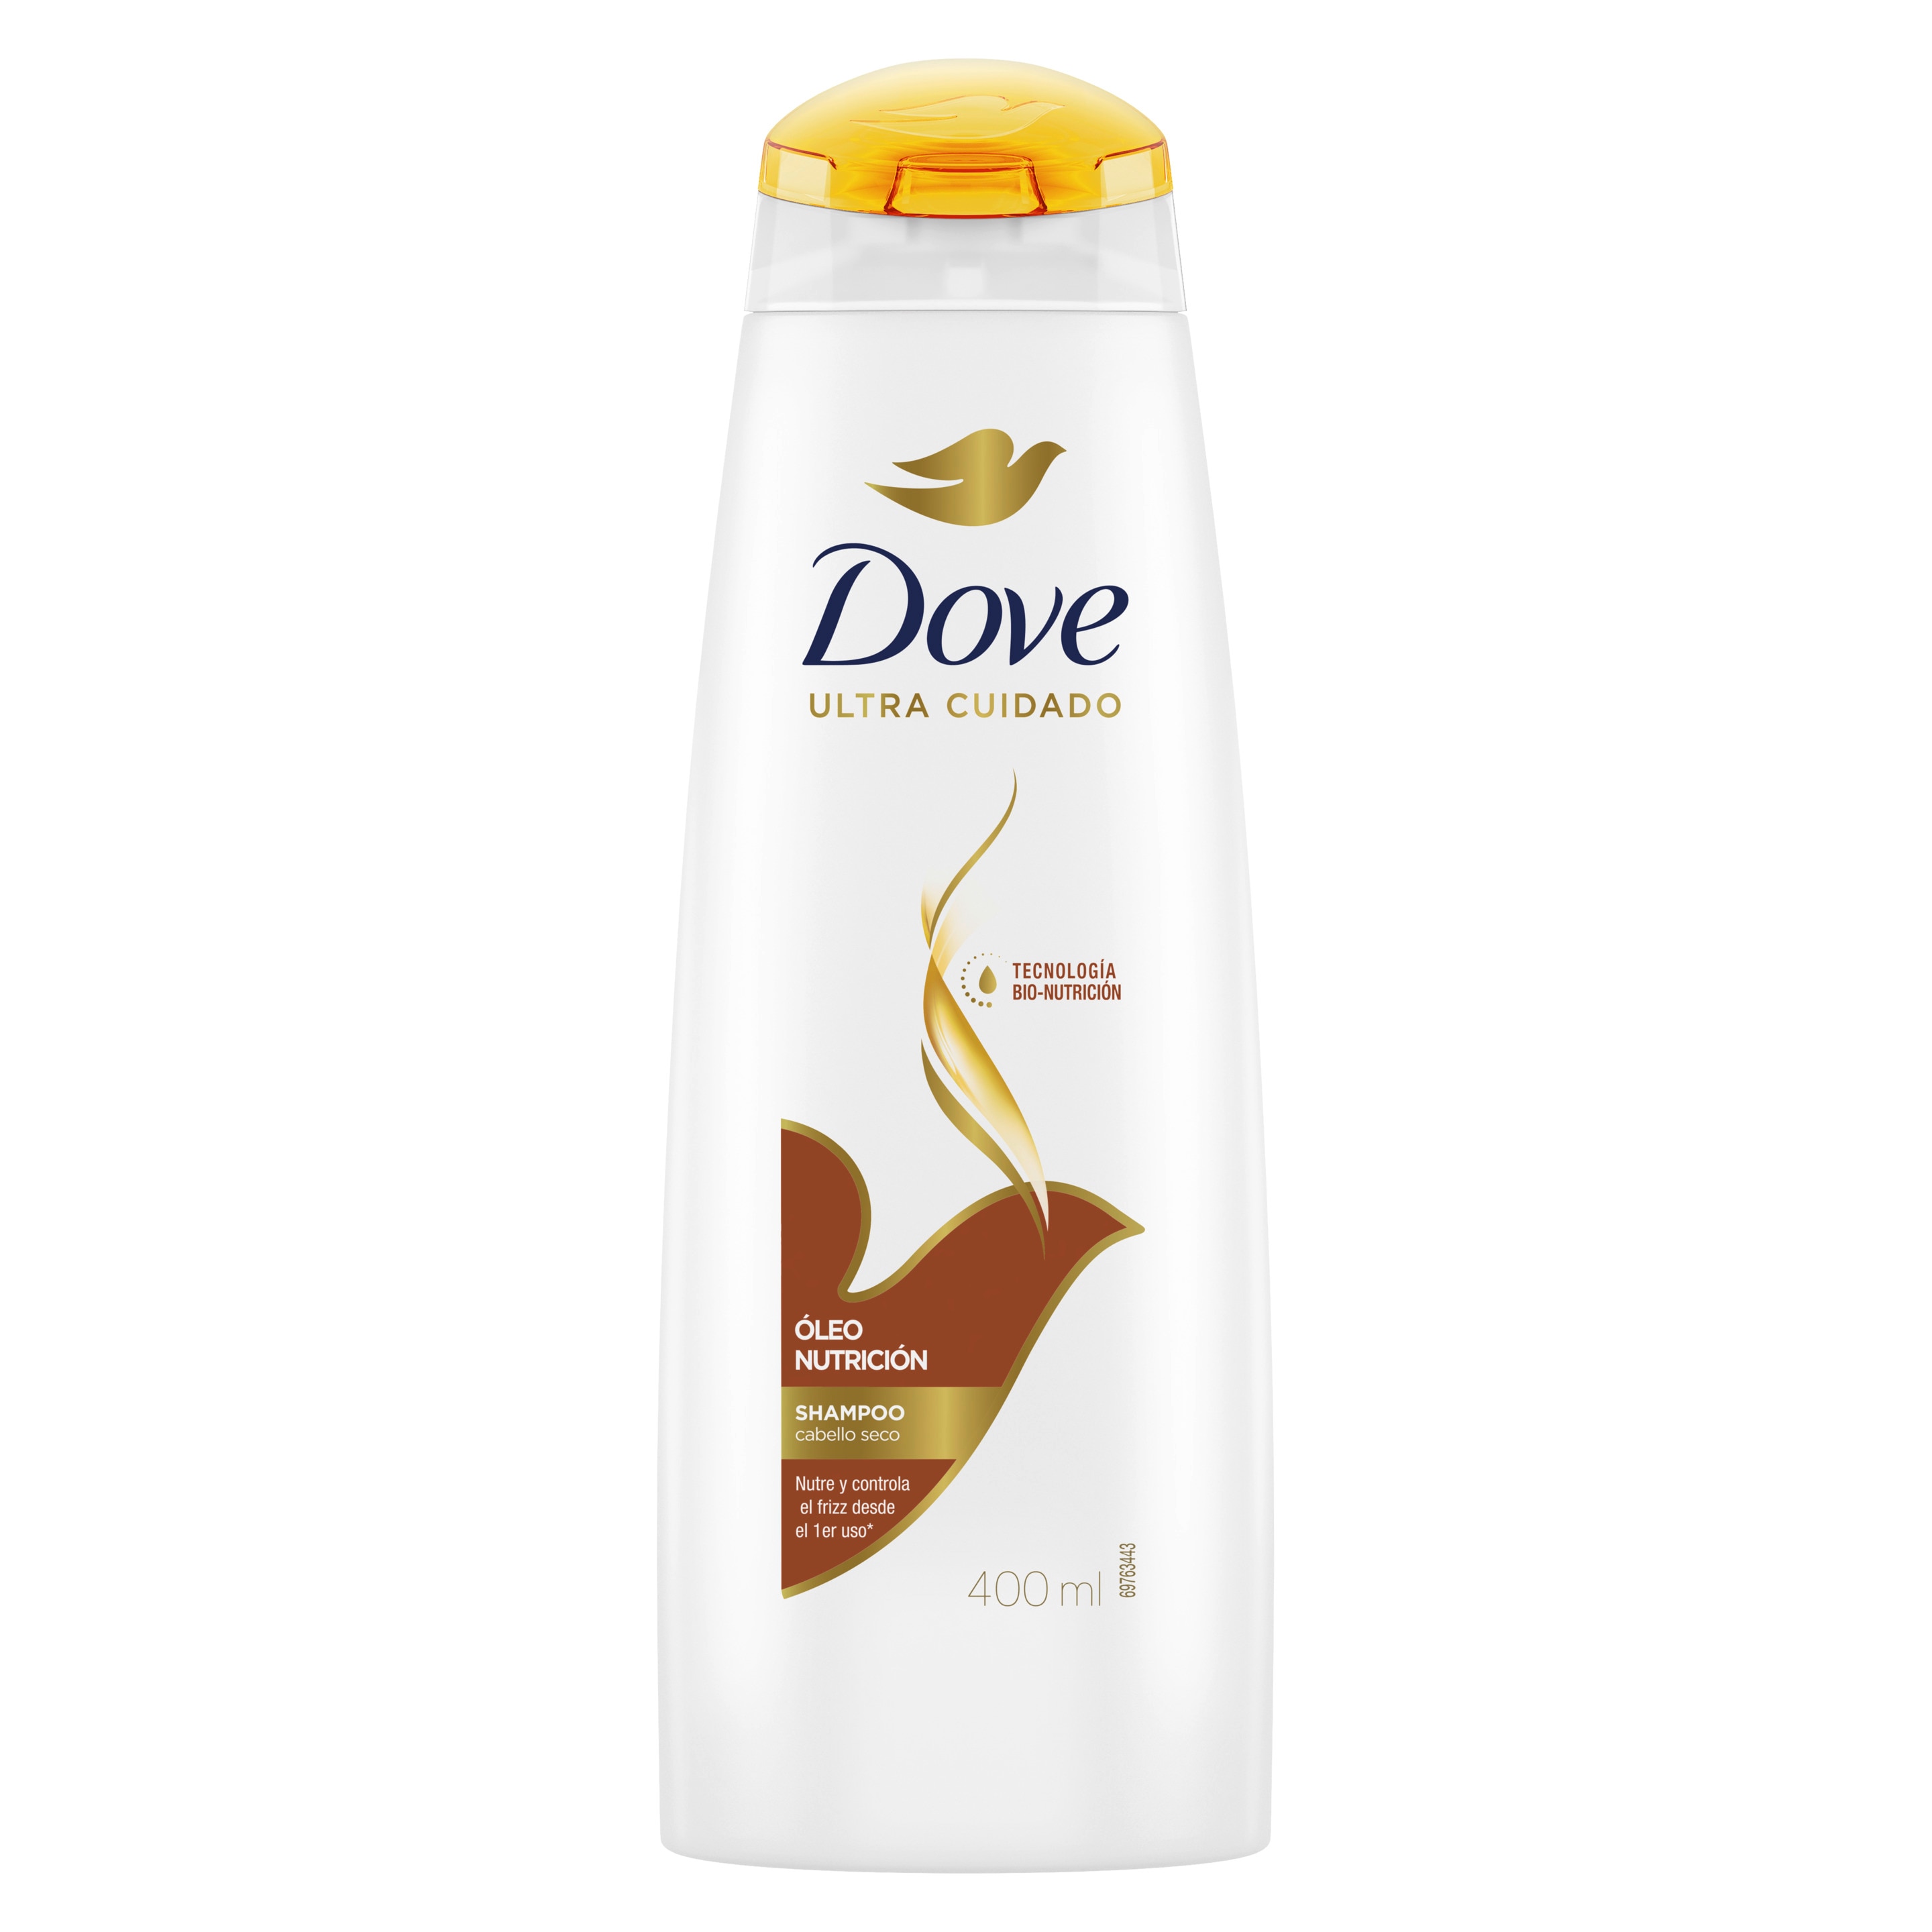 Imagen de envase Dove Shampoo Óleo Nutrición 400ml